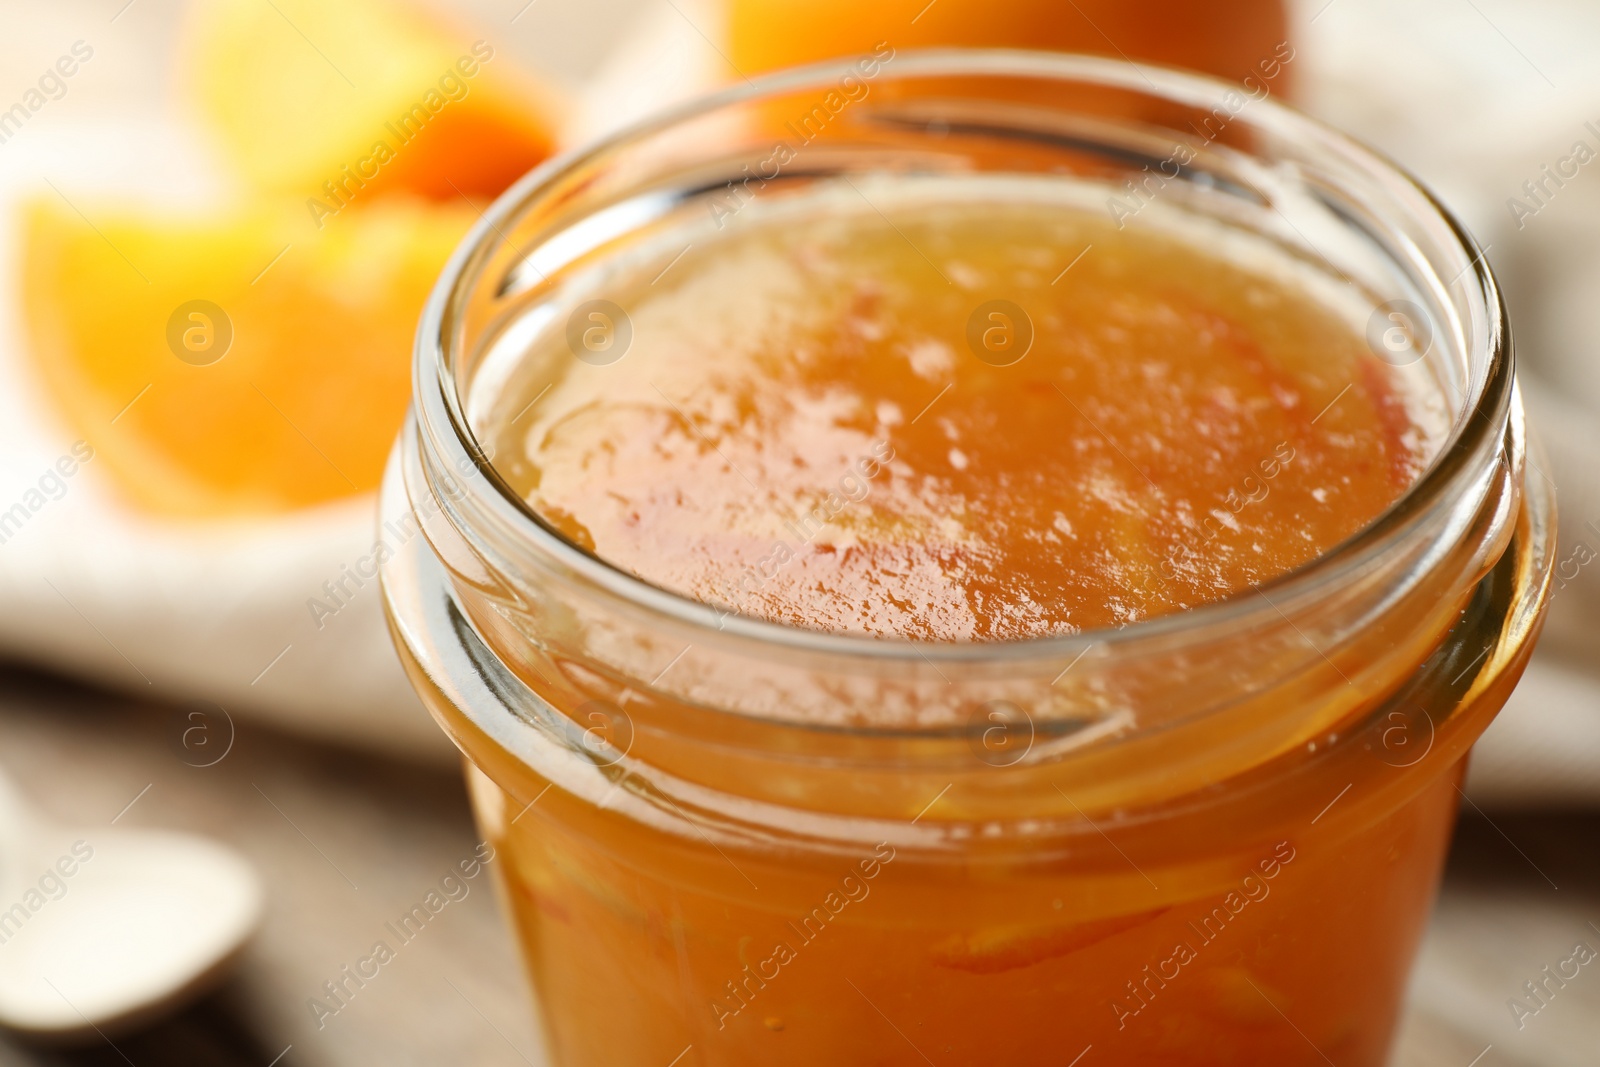 Photo of Homemade delicious orange jam on table, closeup view